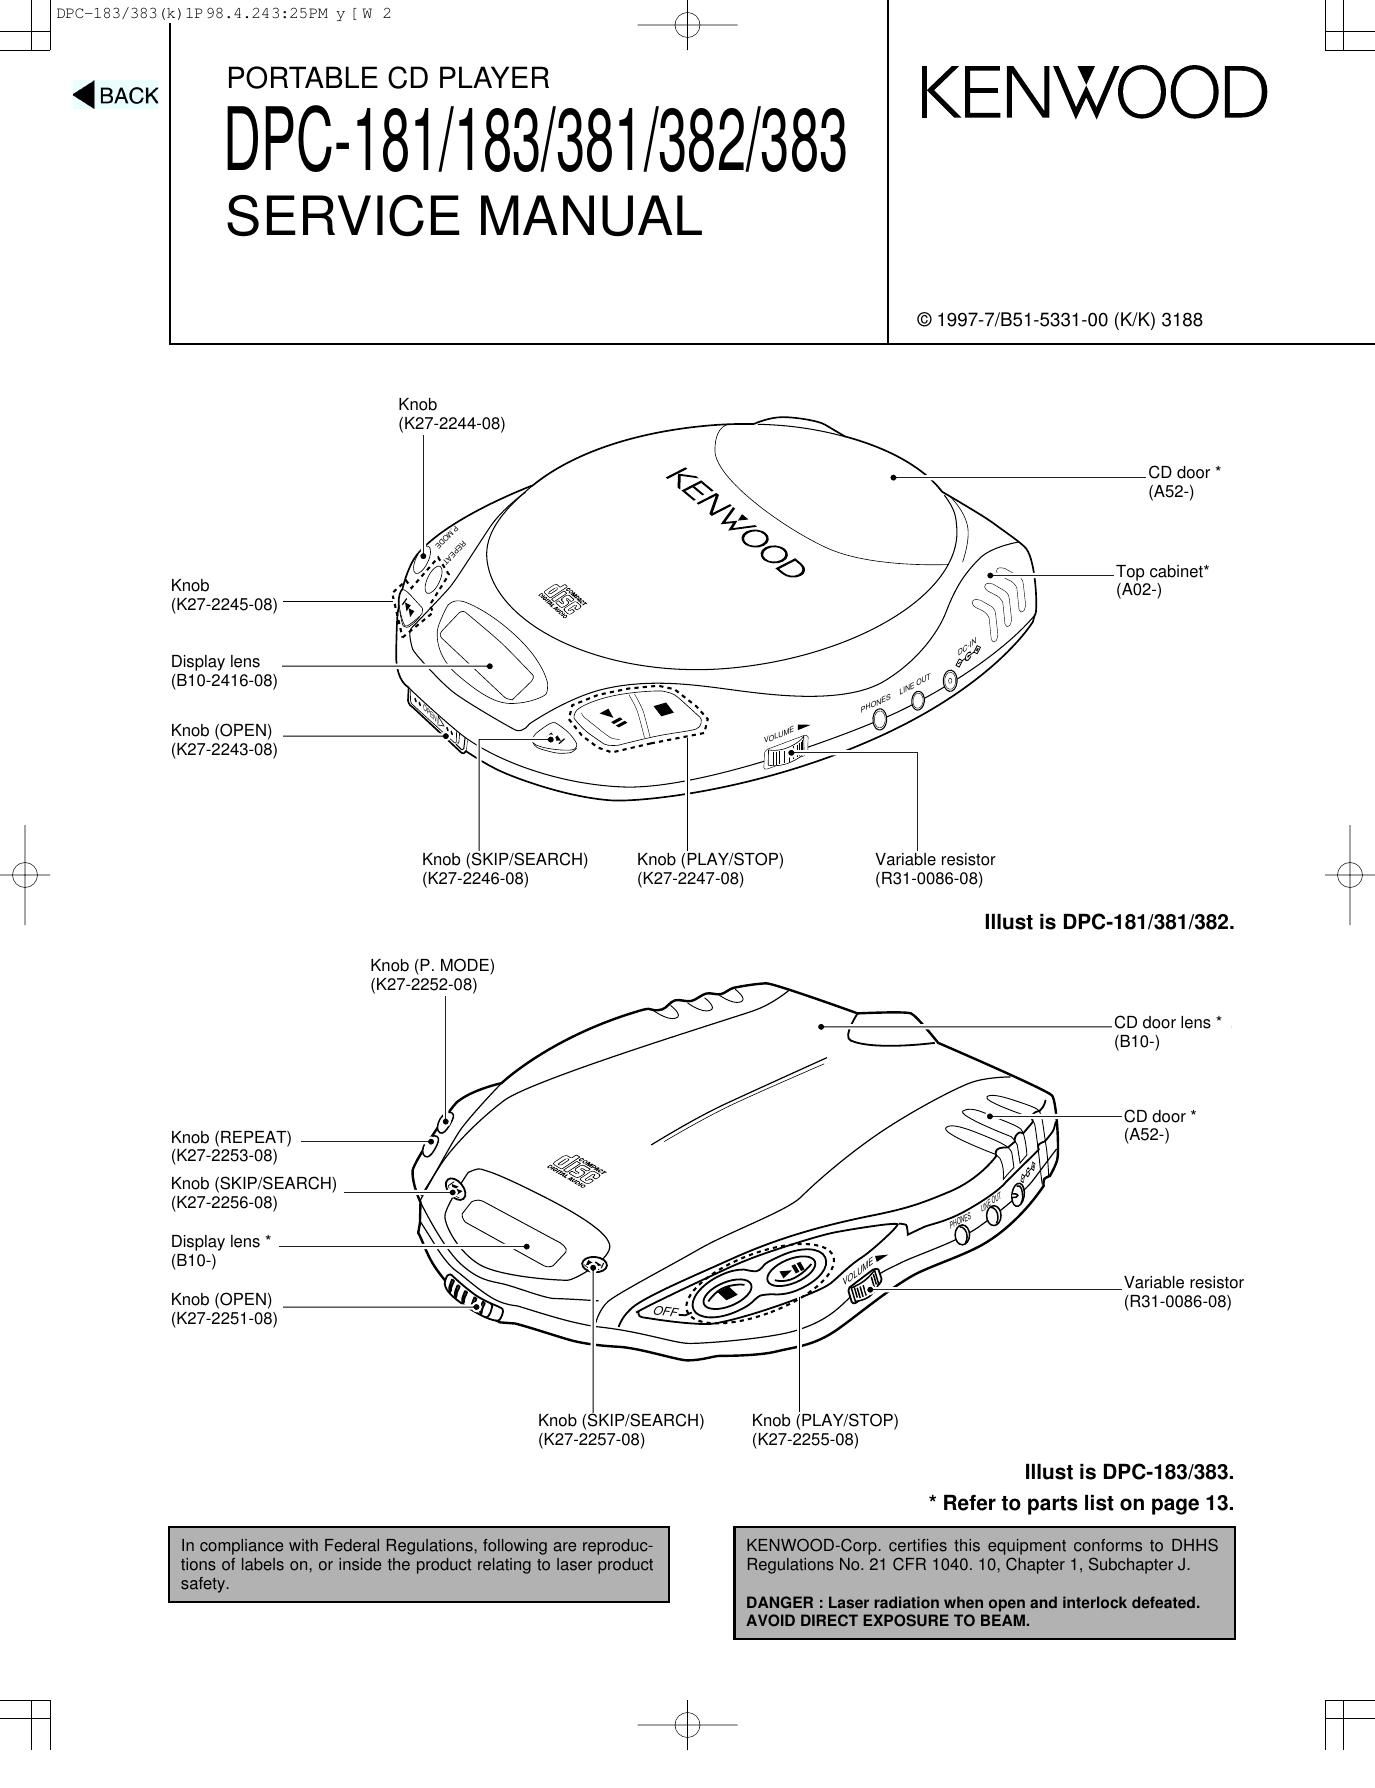 Kenwood DPC 382 Service Manual